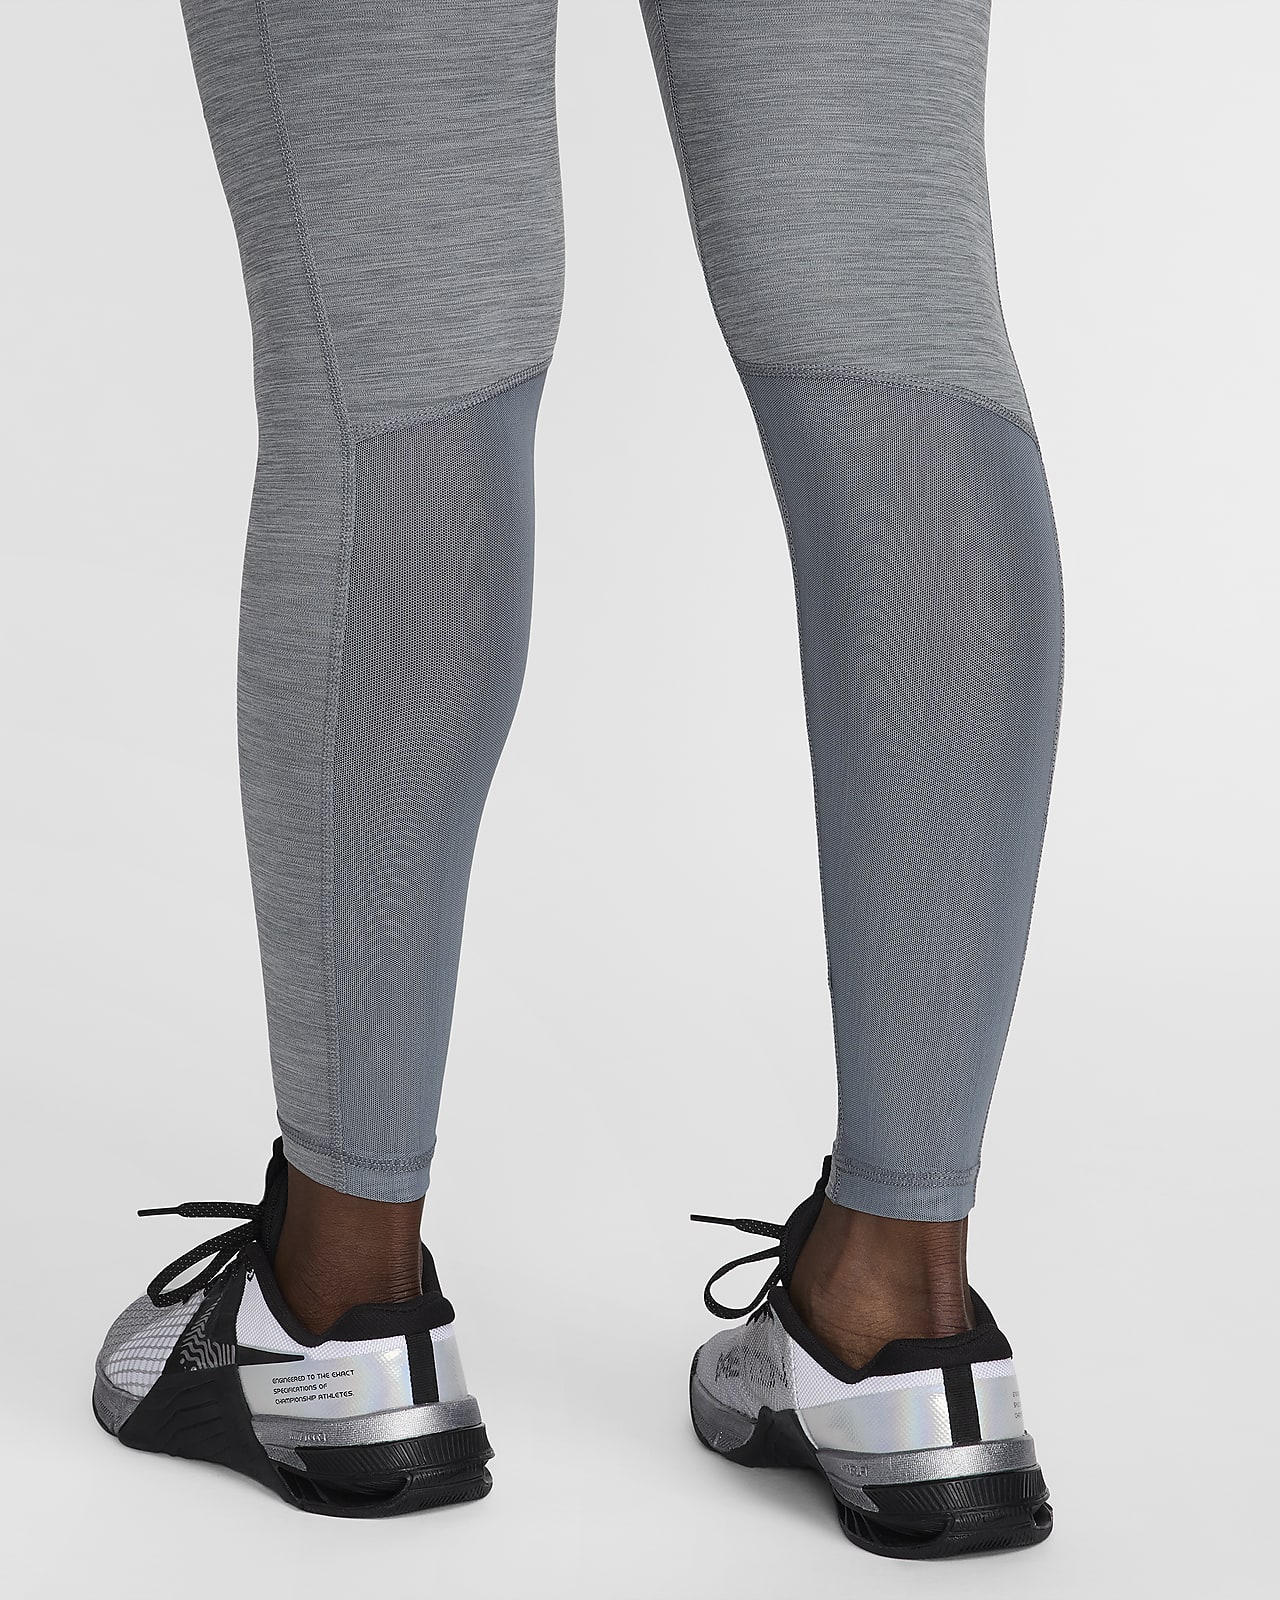 Nike Womens Pro Compression Tights Grey M